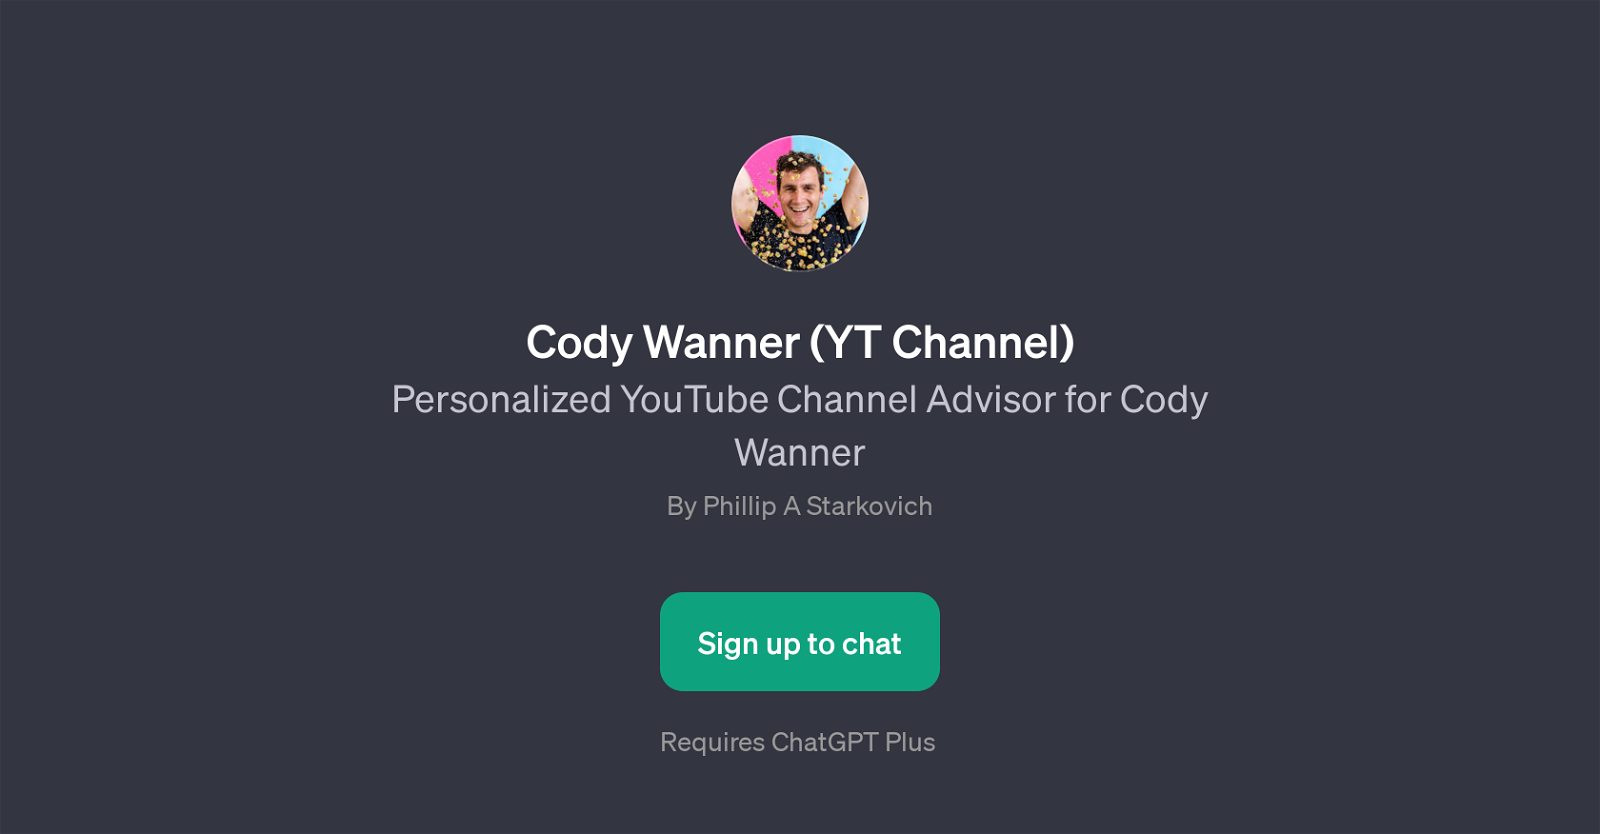 Cody Wanner (YT Channel) website